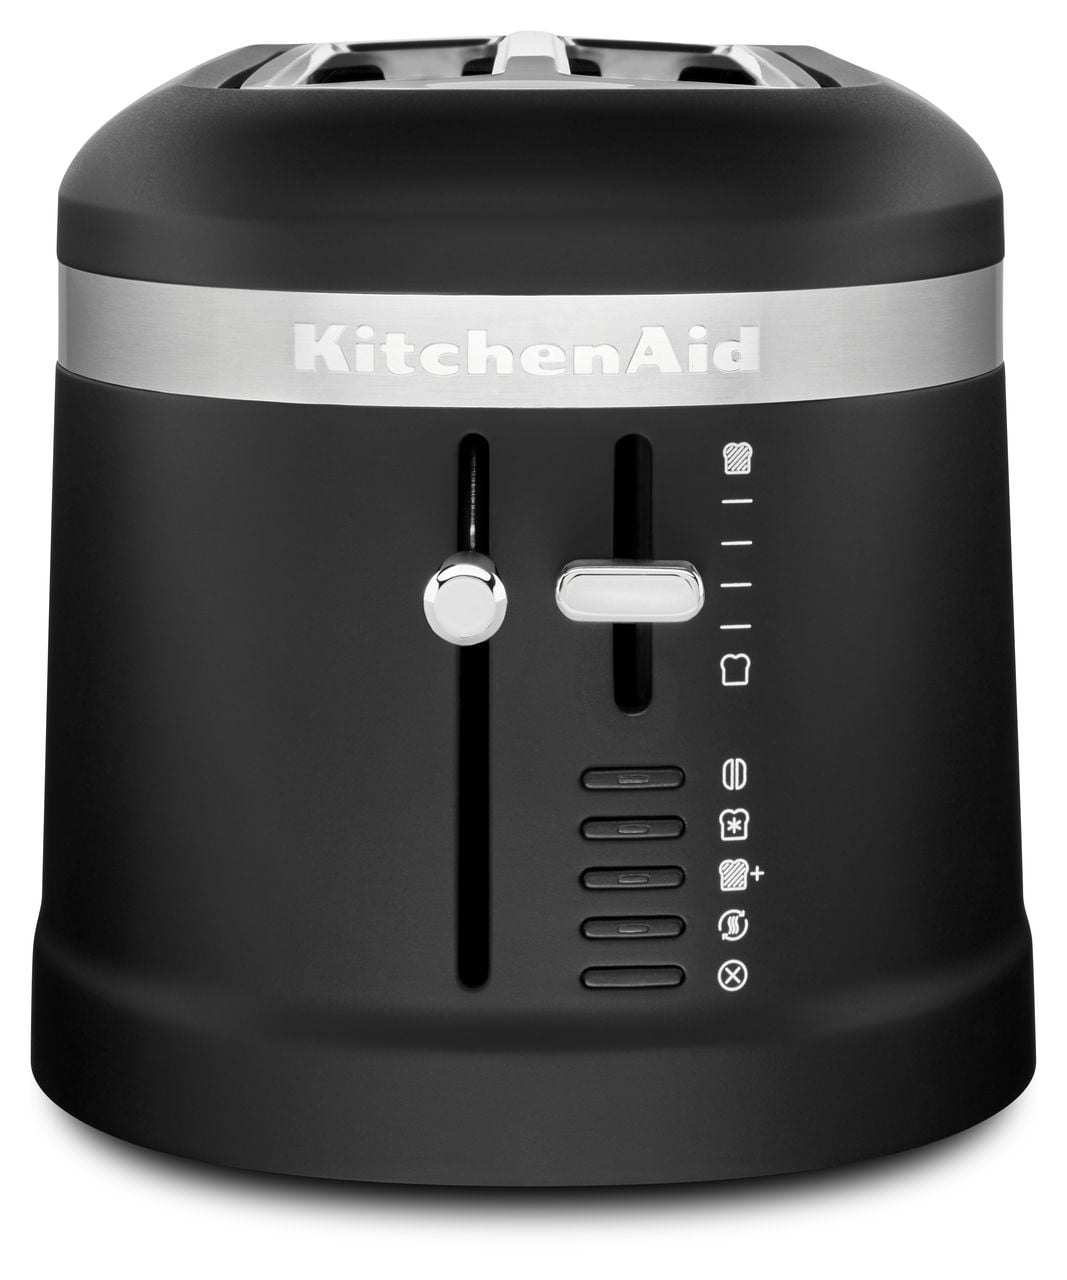 Fingerhut - KitchenAid 4 Slice Toaster